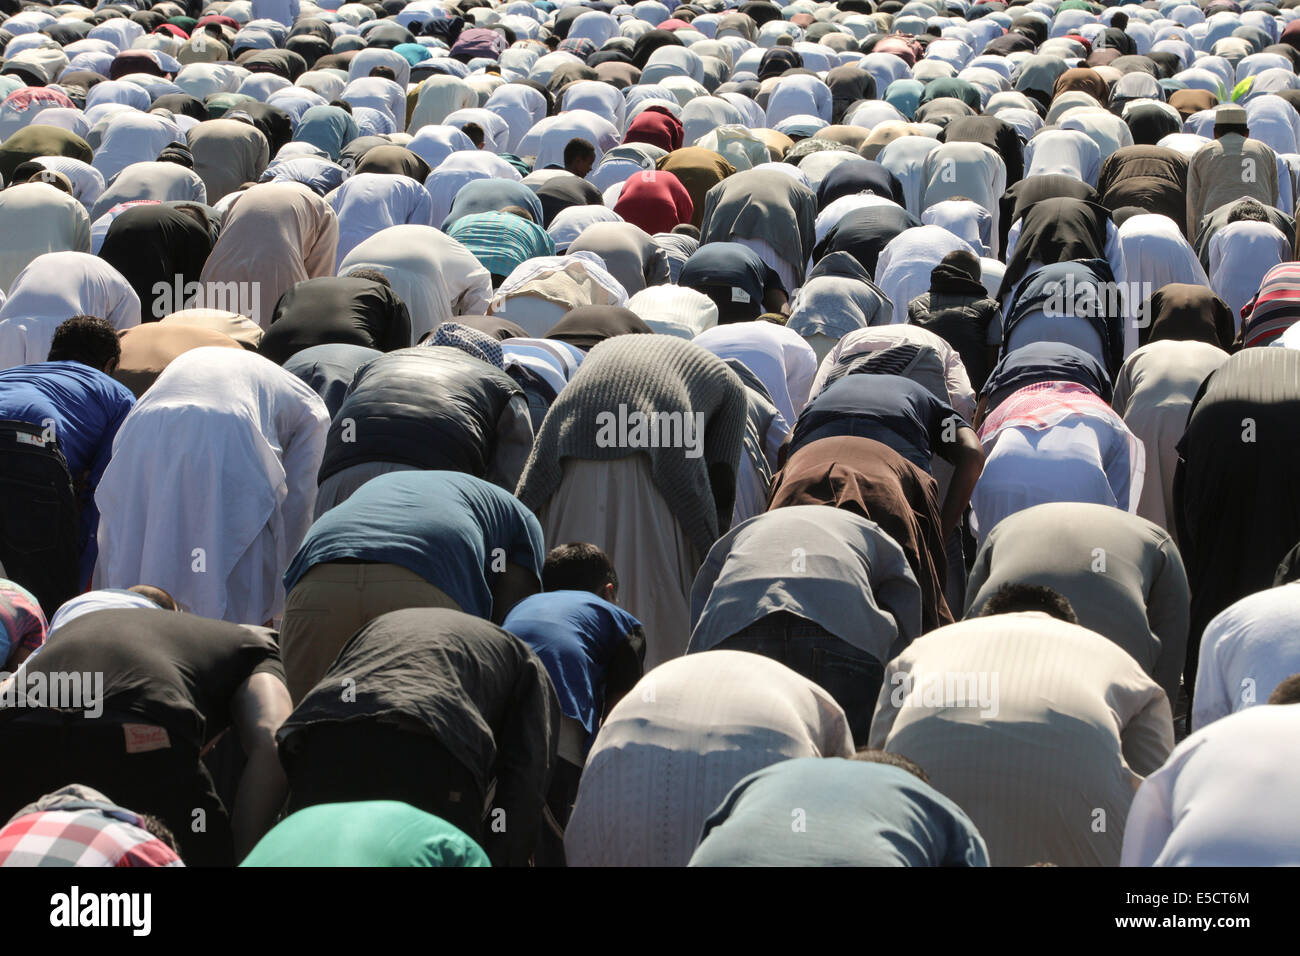 Muslims praying at an outdoor Eid celebration. Small Heath Park, Birmingham UK Stock Photo